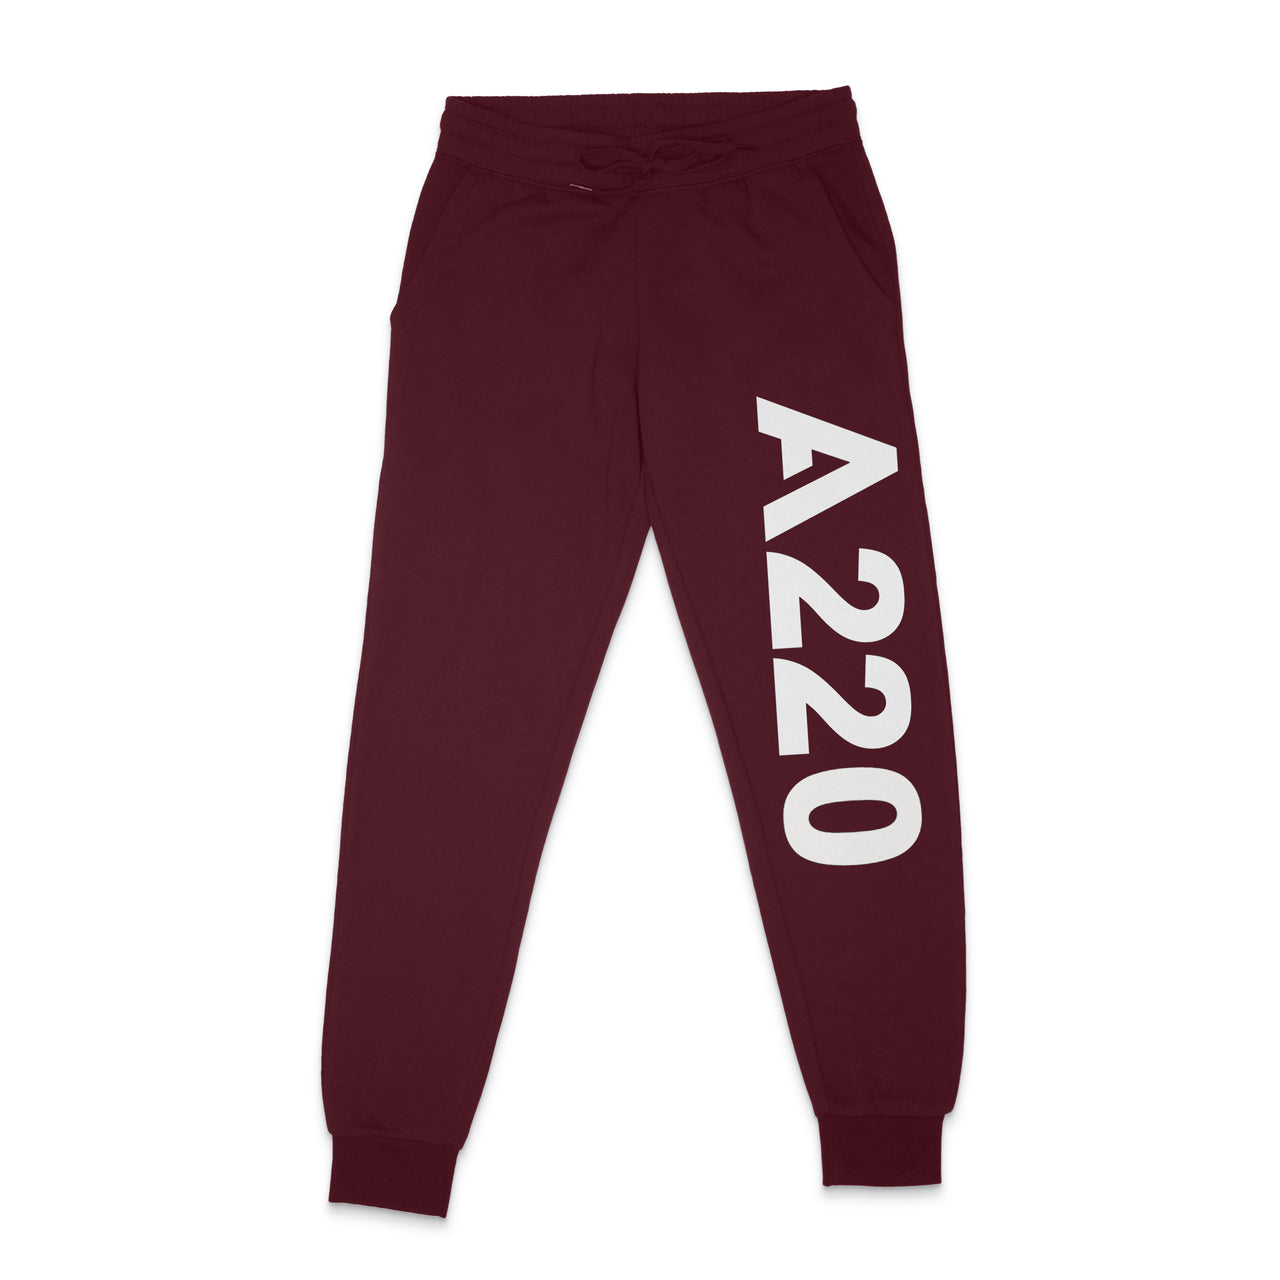 A220 Text Designed Sweatpants